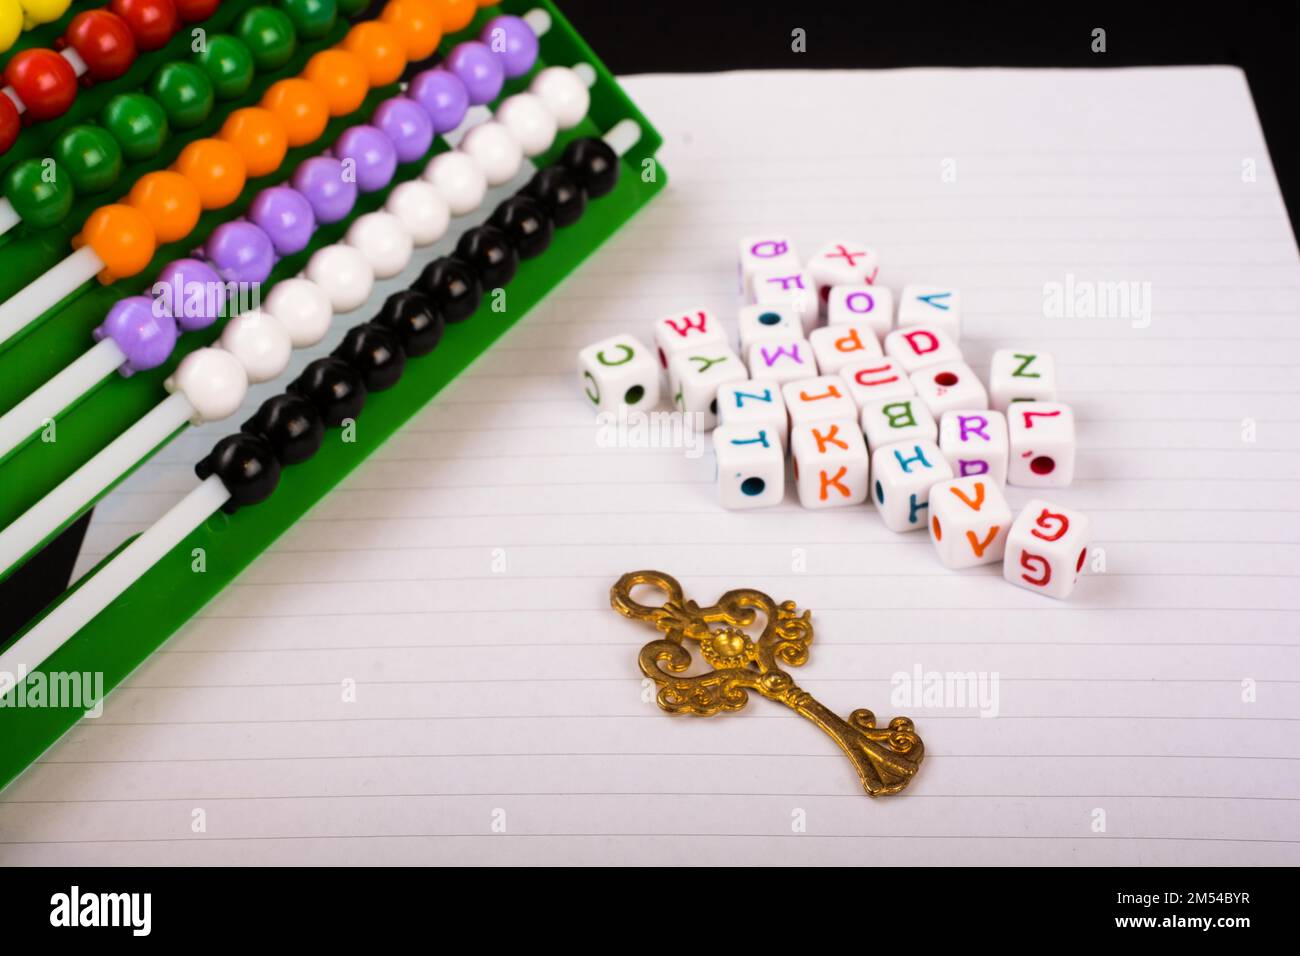 Abacus, lettere di caratteri alfabetici e cubici affiancate su carta bianca Foto Stock